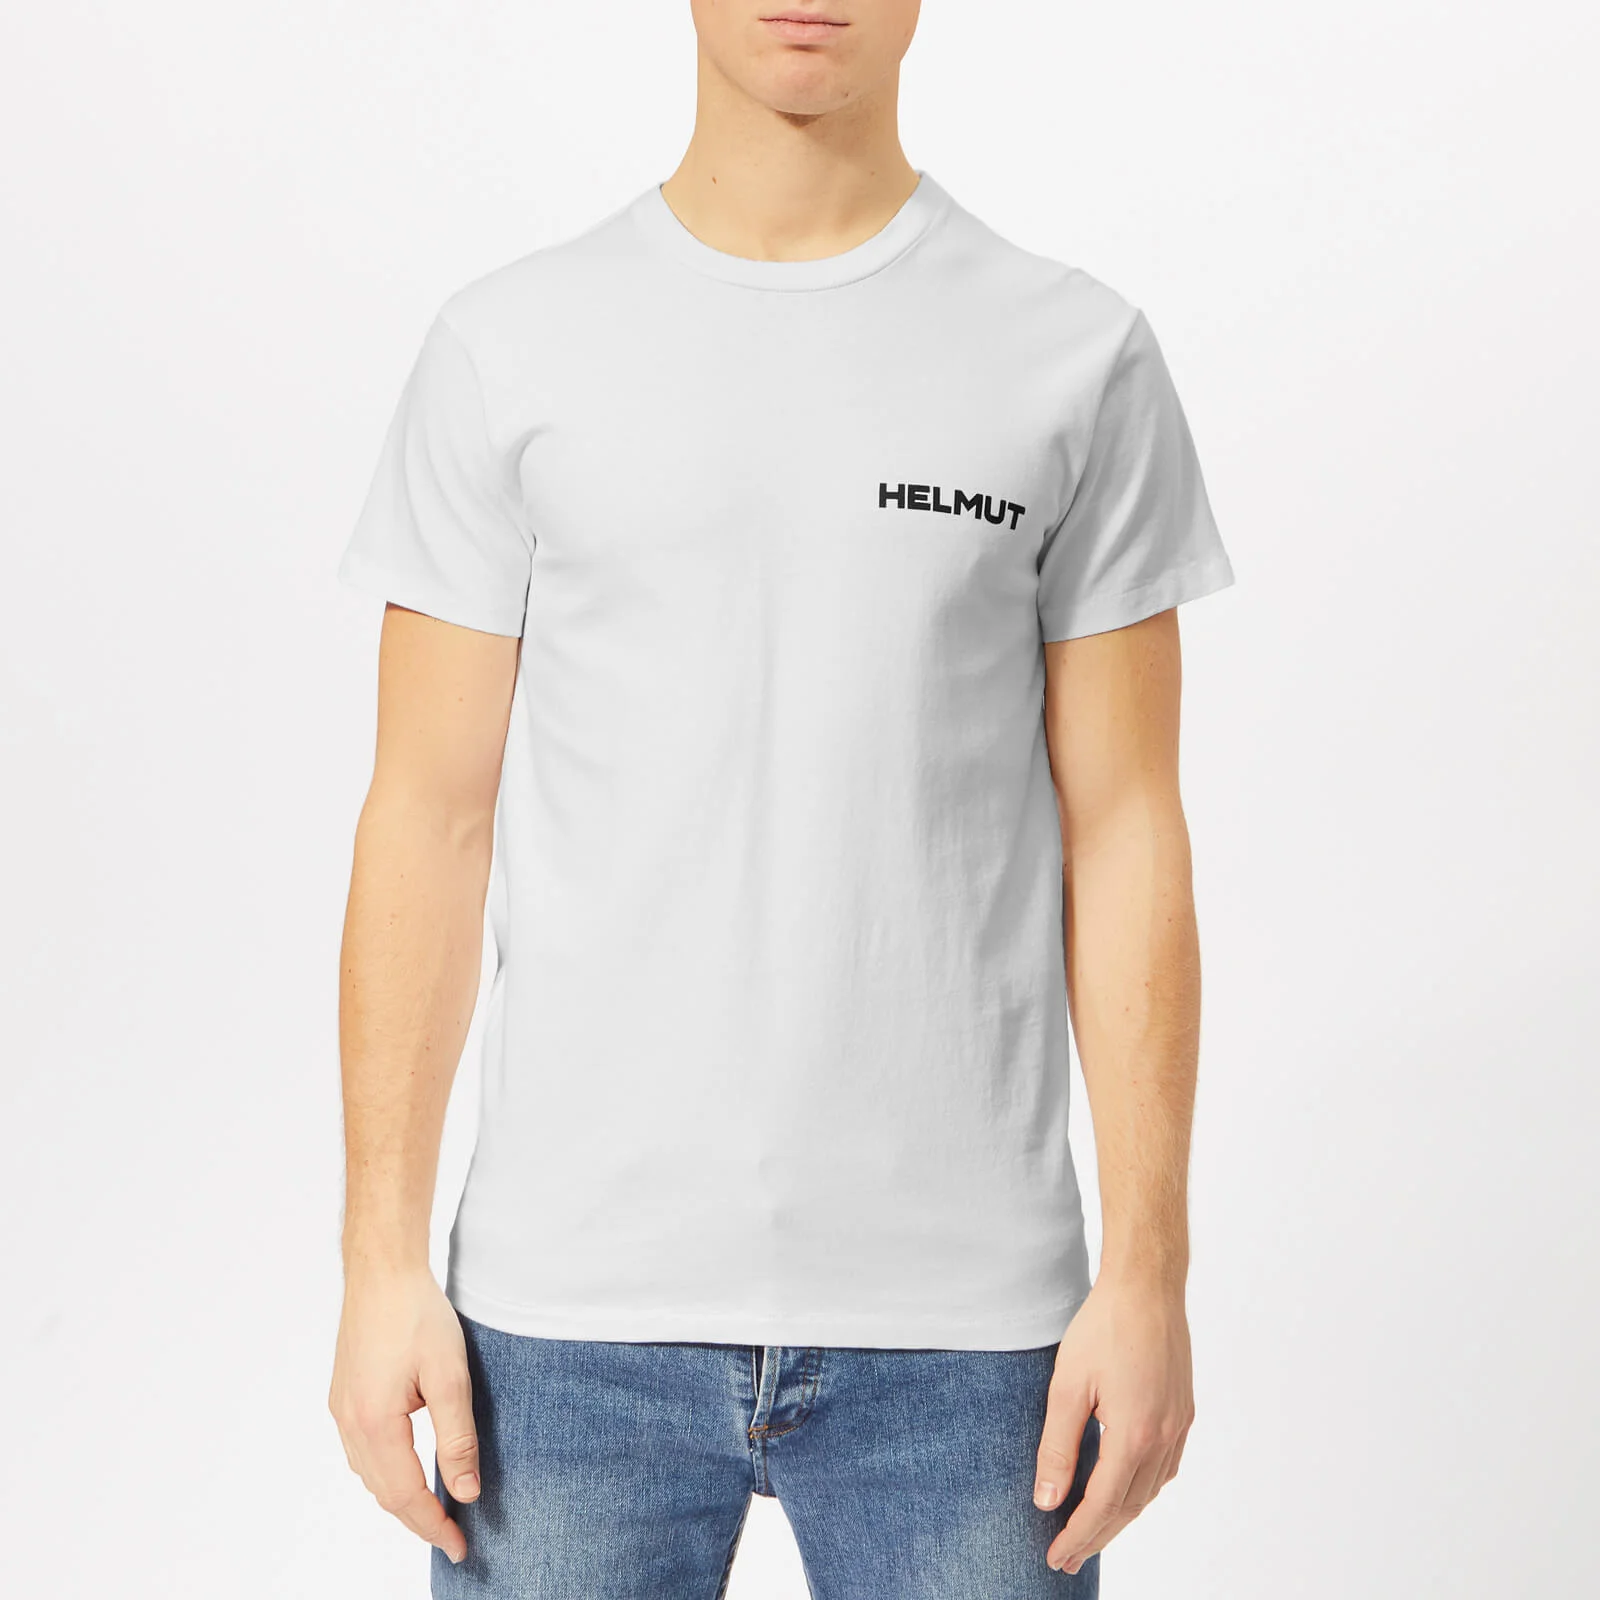 Helmut Lang Men's Little T-Shirt with Print - Chalk White Image 1